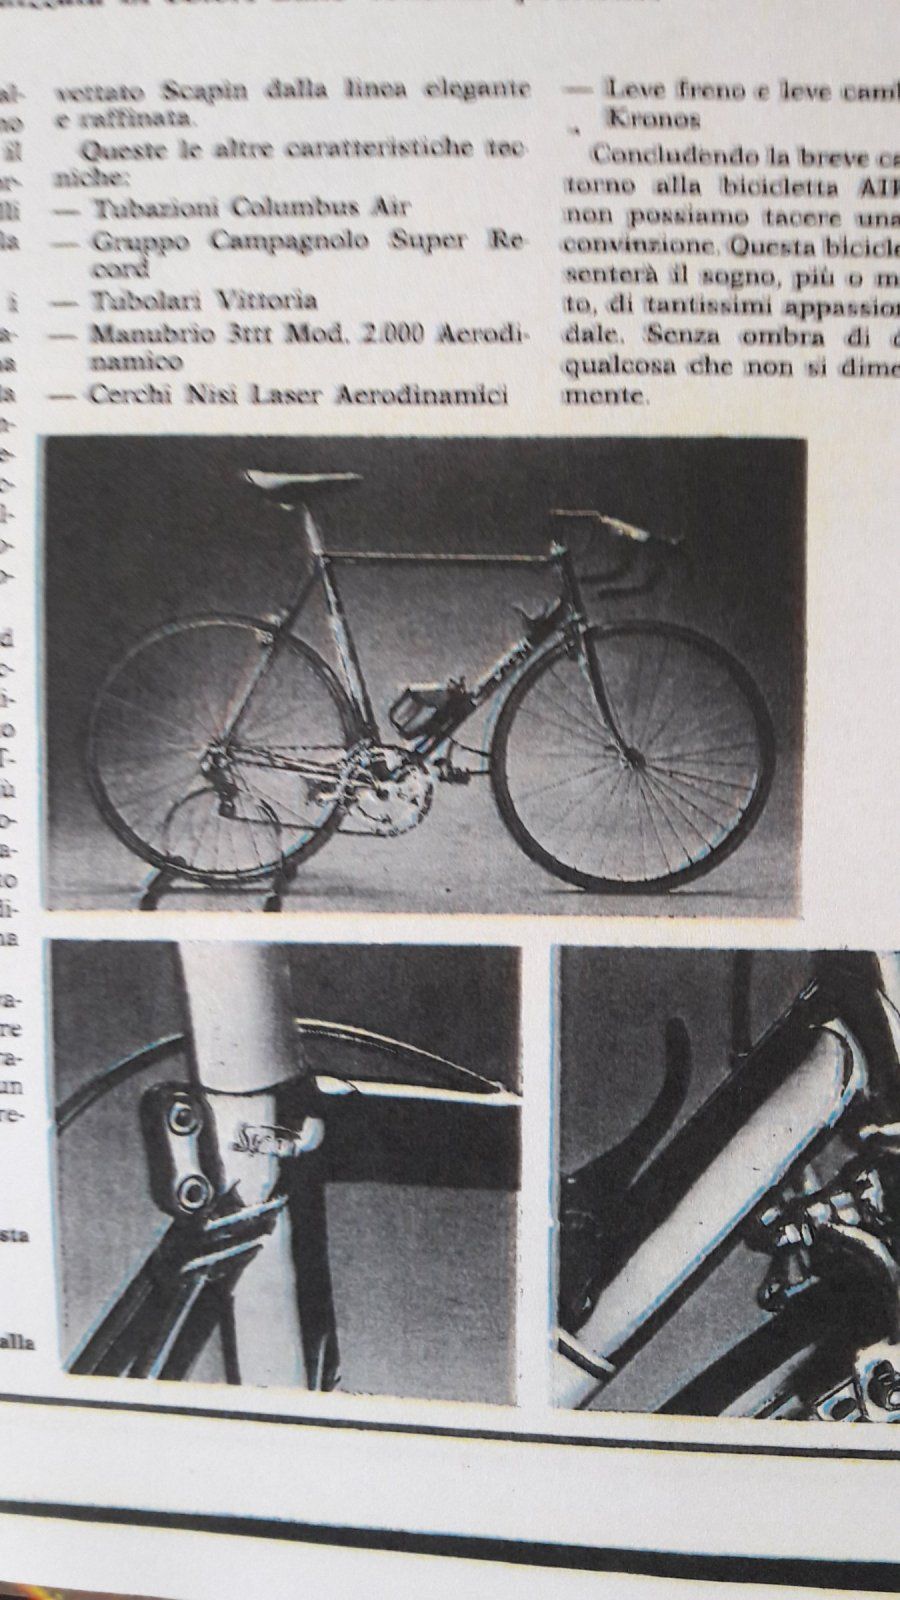 bici sport gennaio 1982 Nisi Laser Scapin Profil Air Prototype.jpg